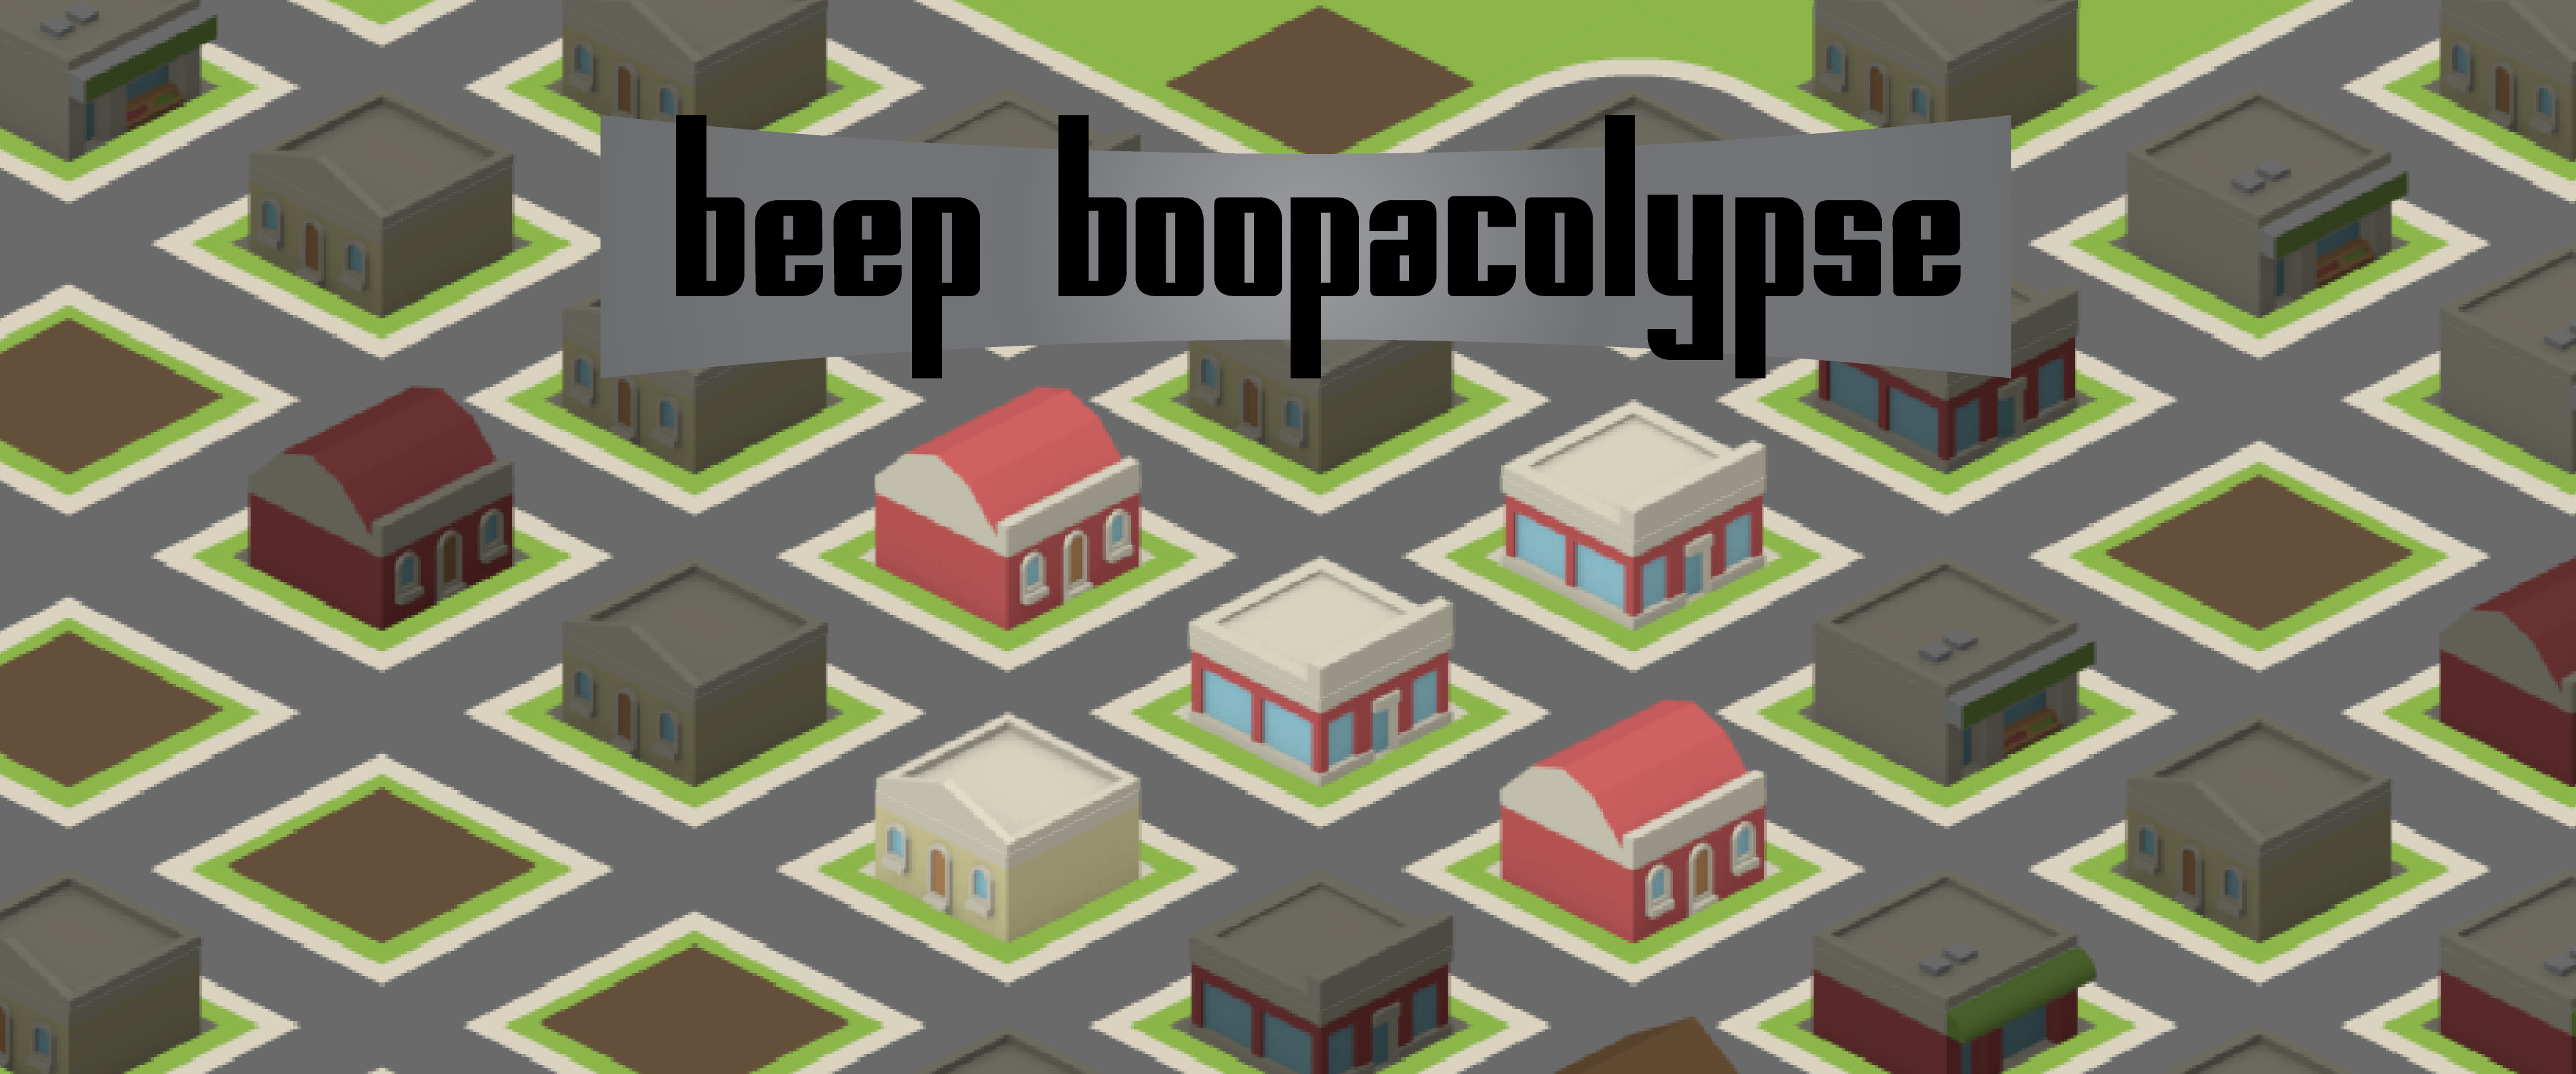 Beep Boopacolypse